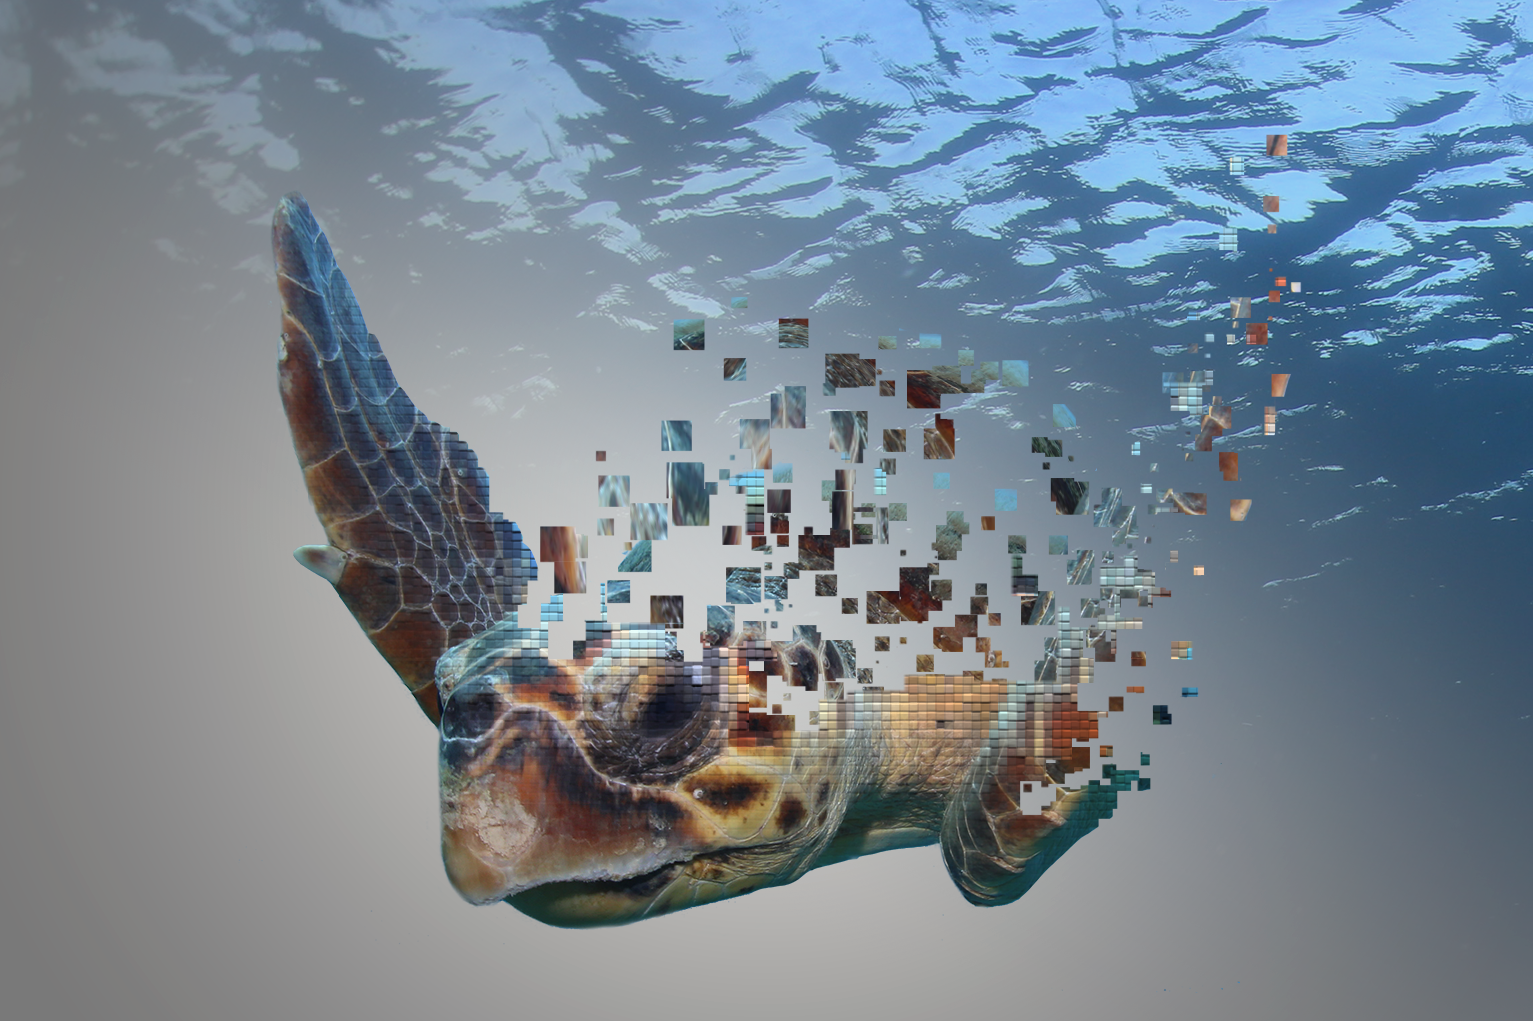 A sea turtle swimming in a blue ocean